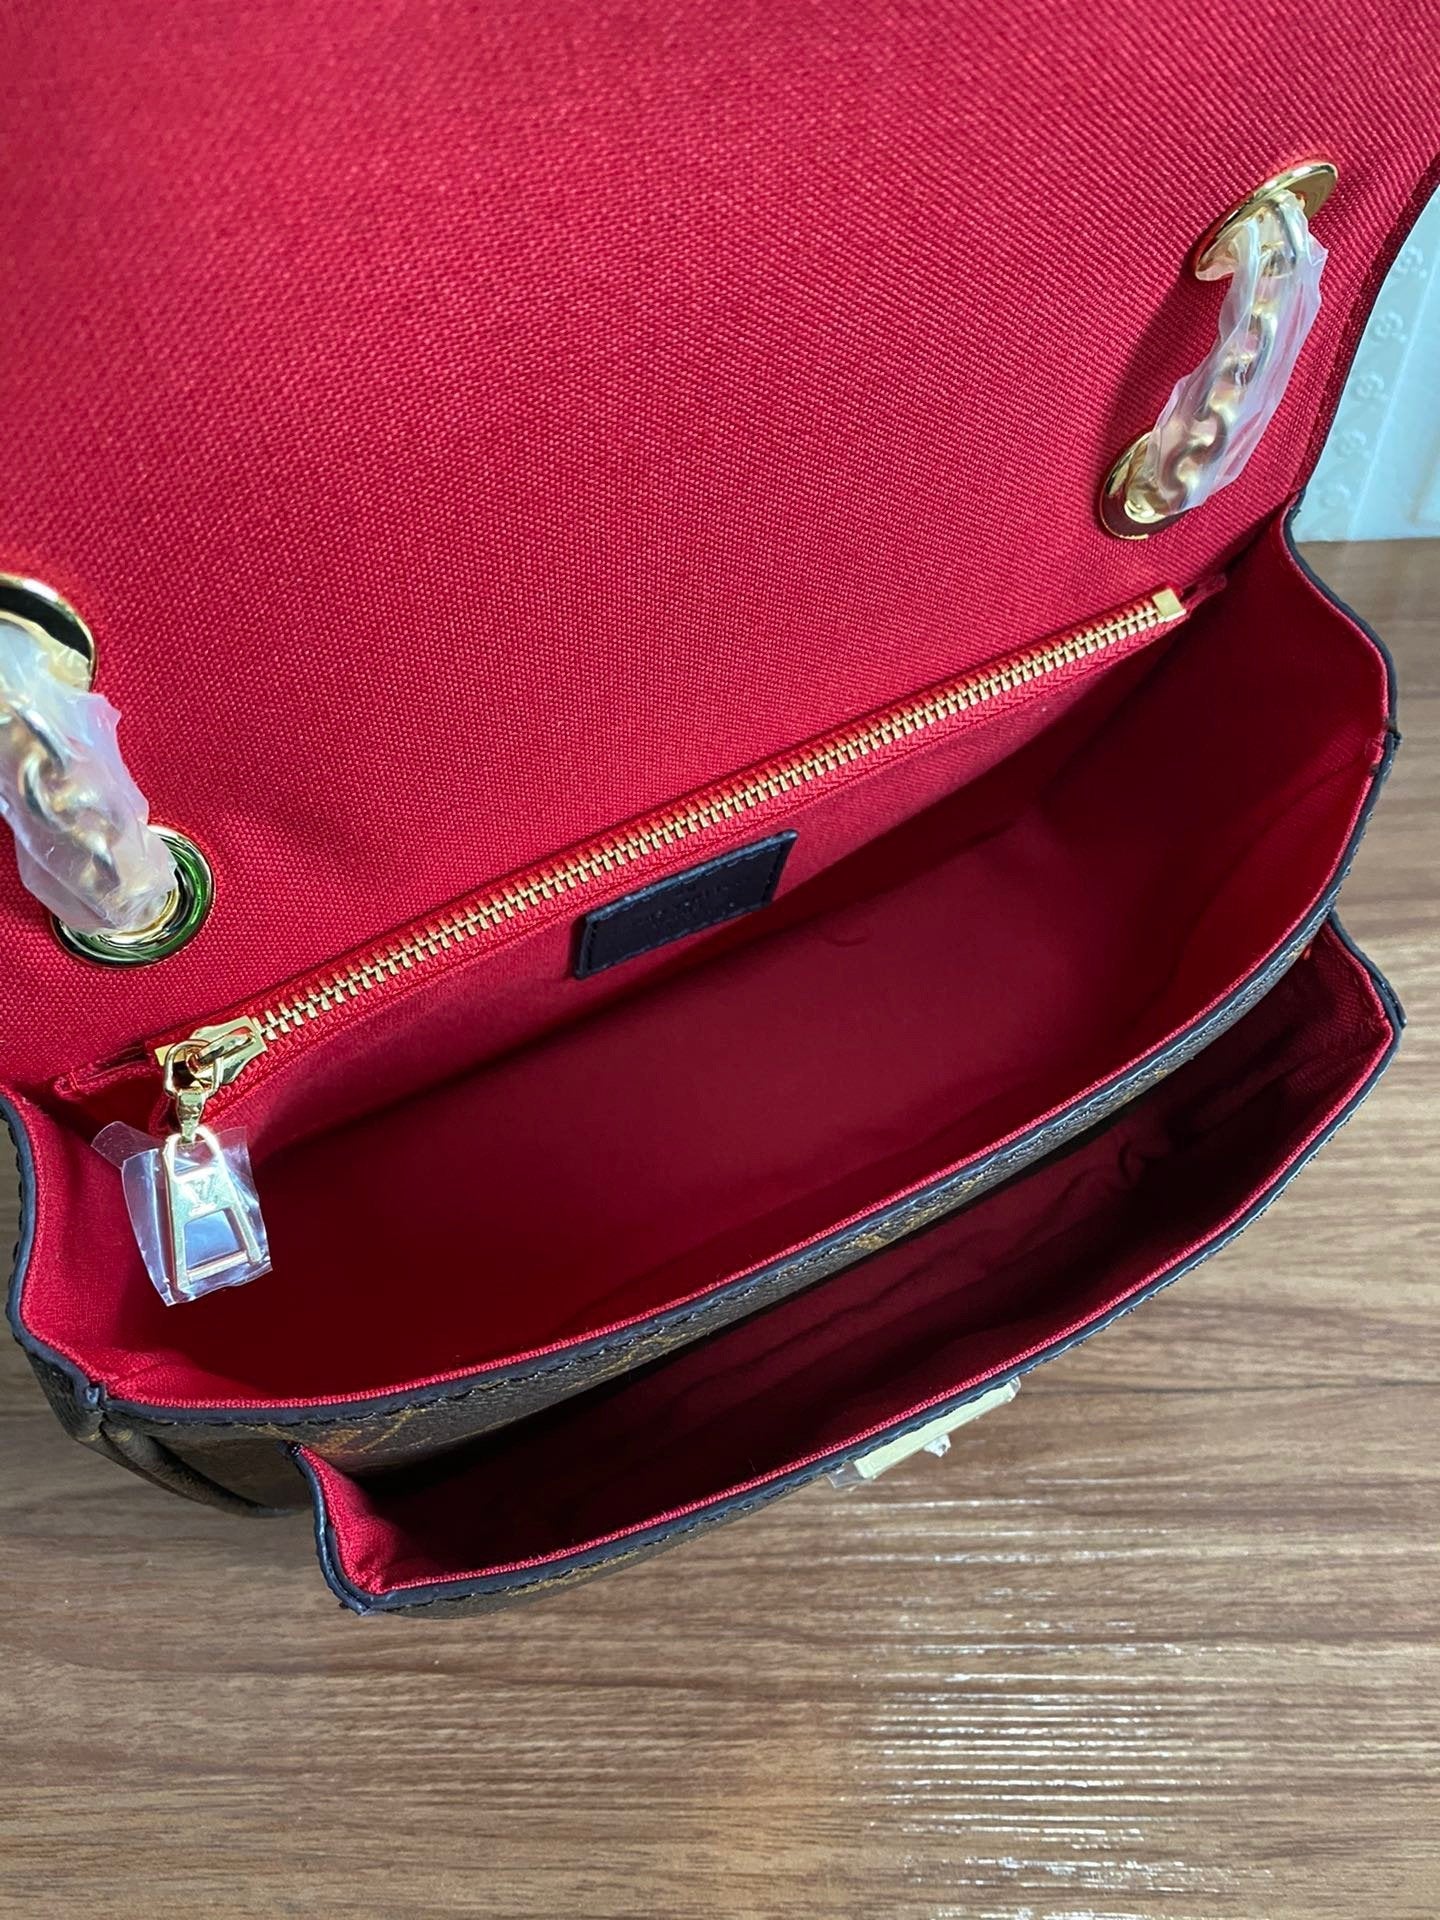 BL - High Quality Bags LUV 022